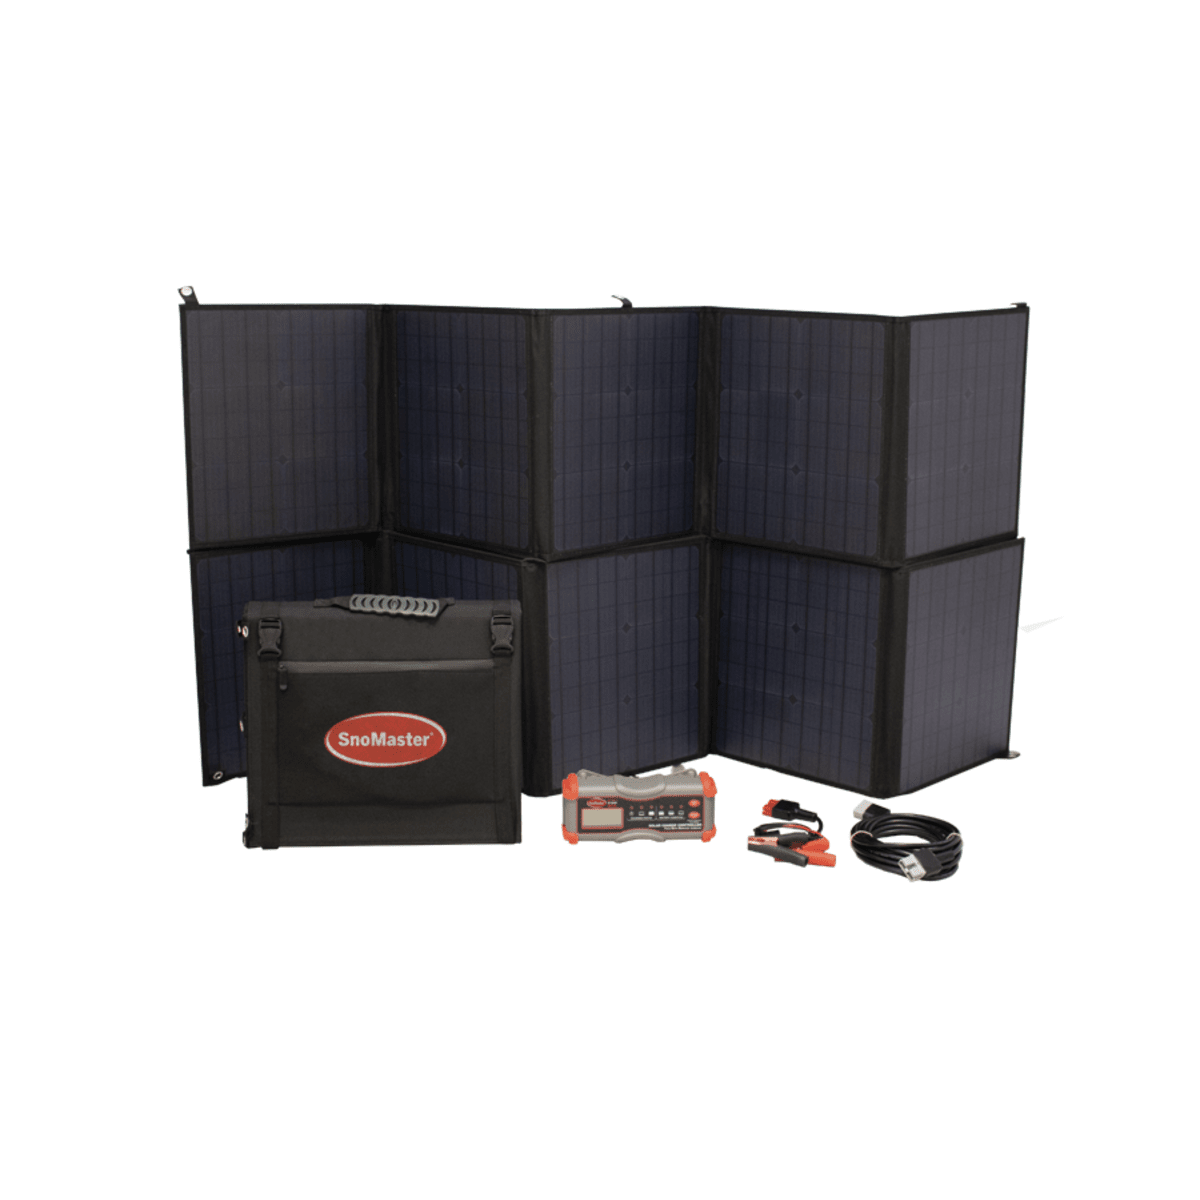 SnoMaster SP-200 200W Solar Panel Kit with Regulator